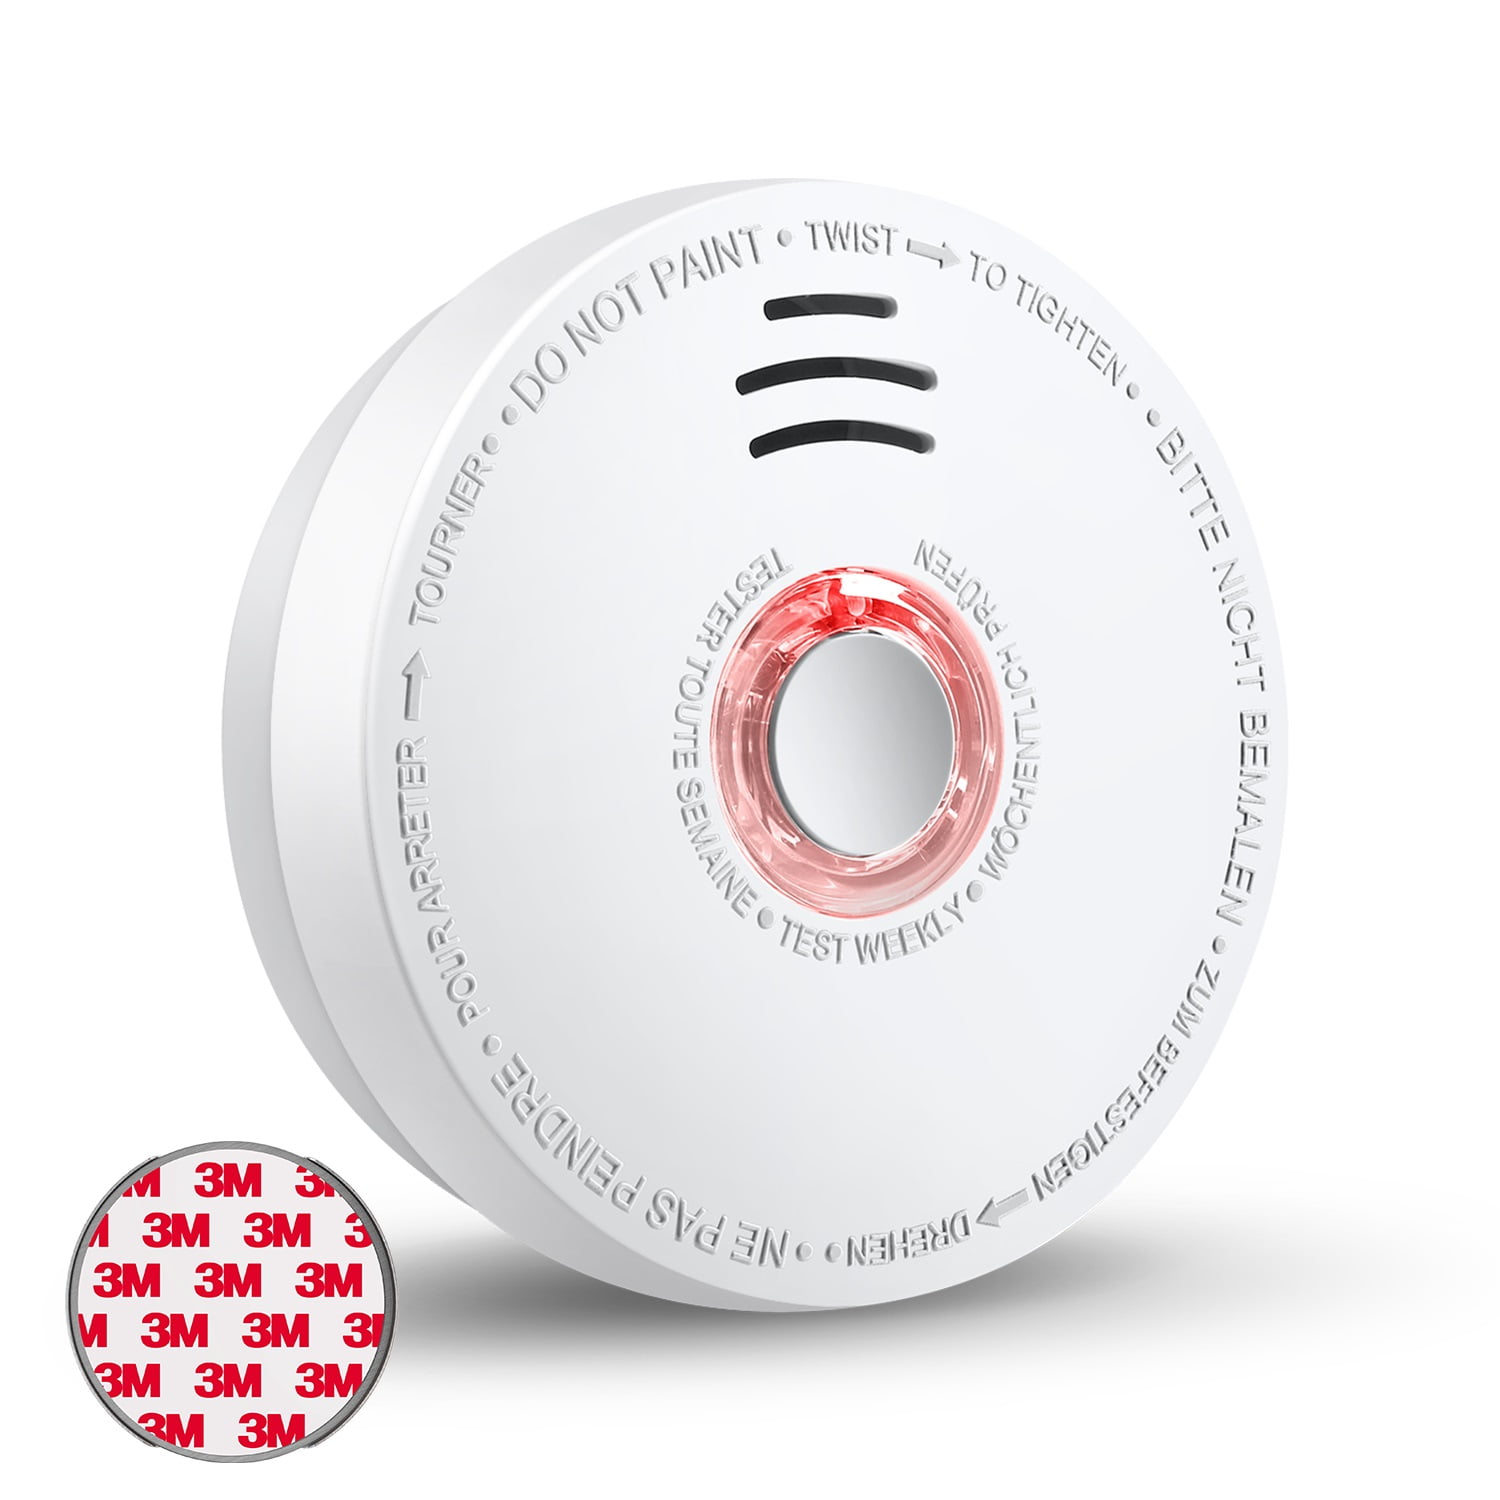 FireAngel 2 x Home Fire Alarm Smoke Detector  Fireangel Twin Pack with Batteries 